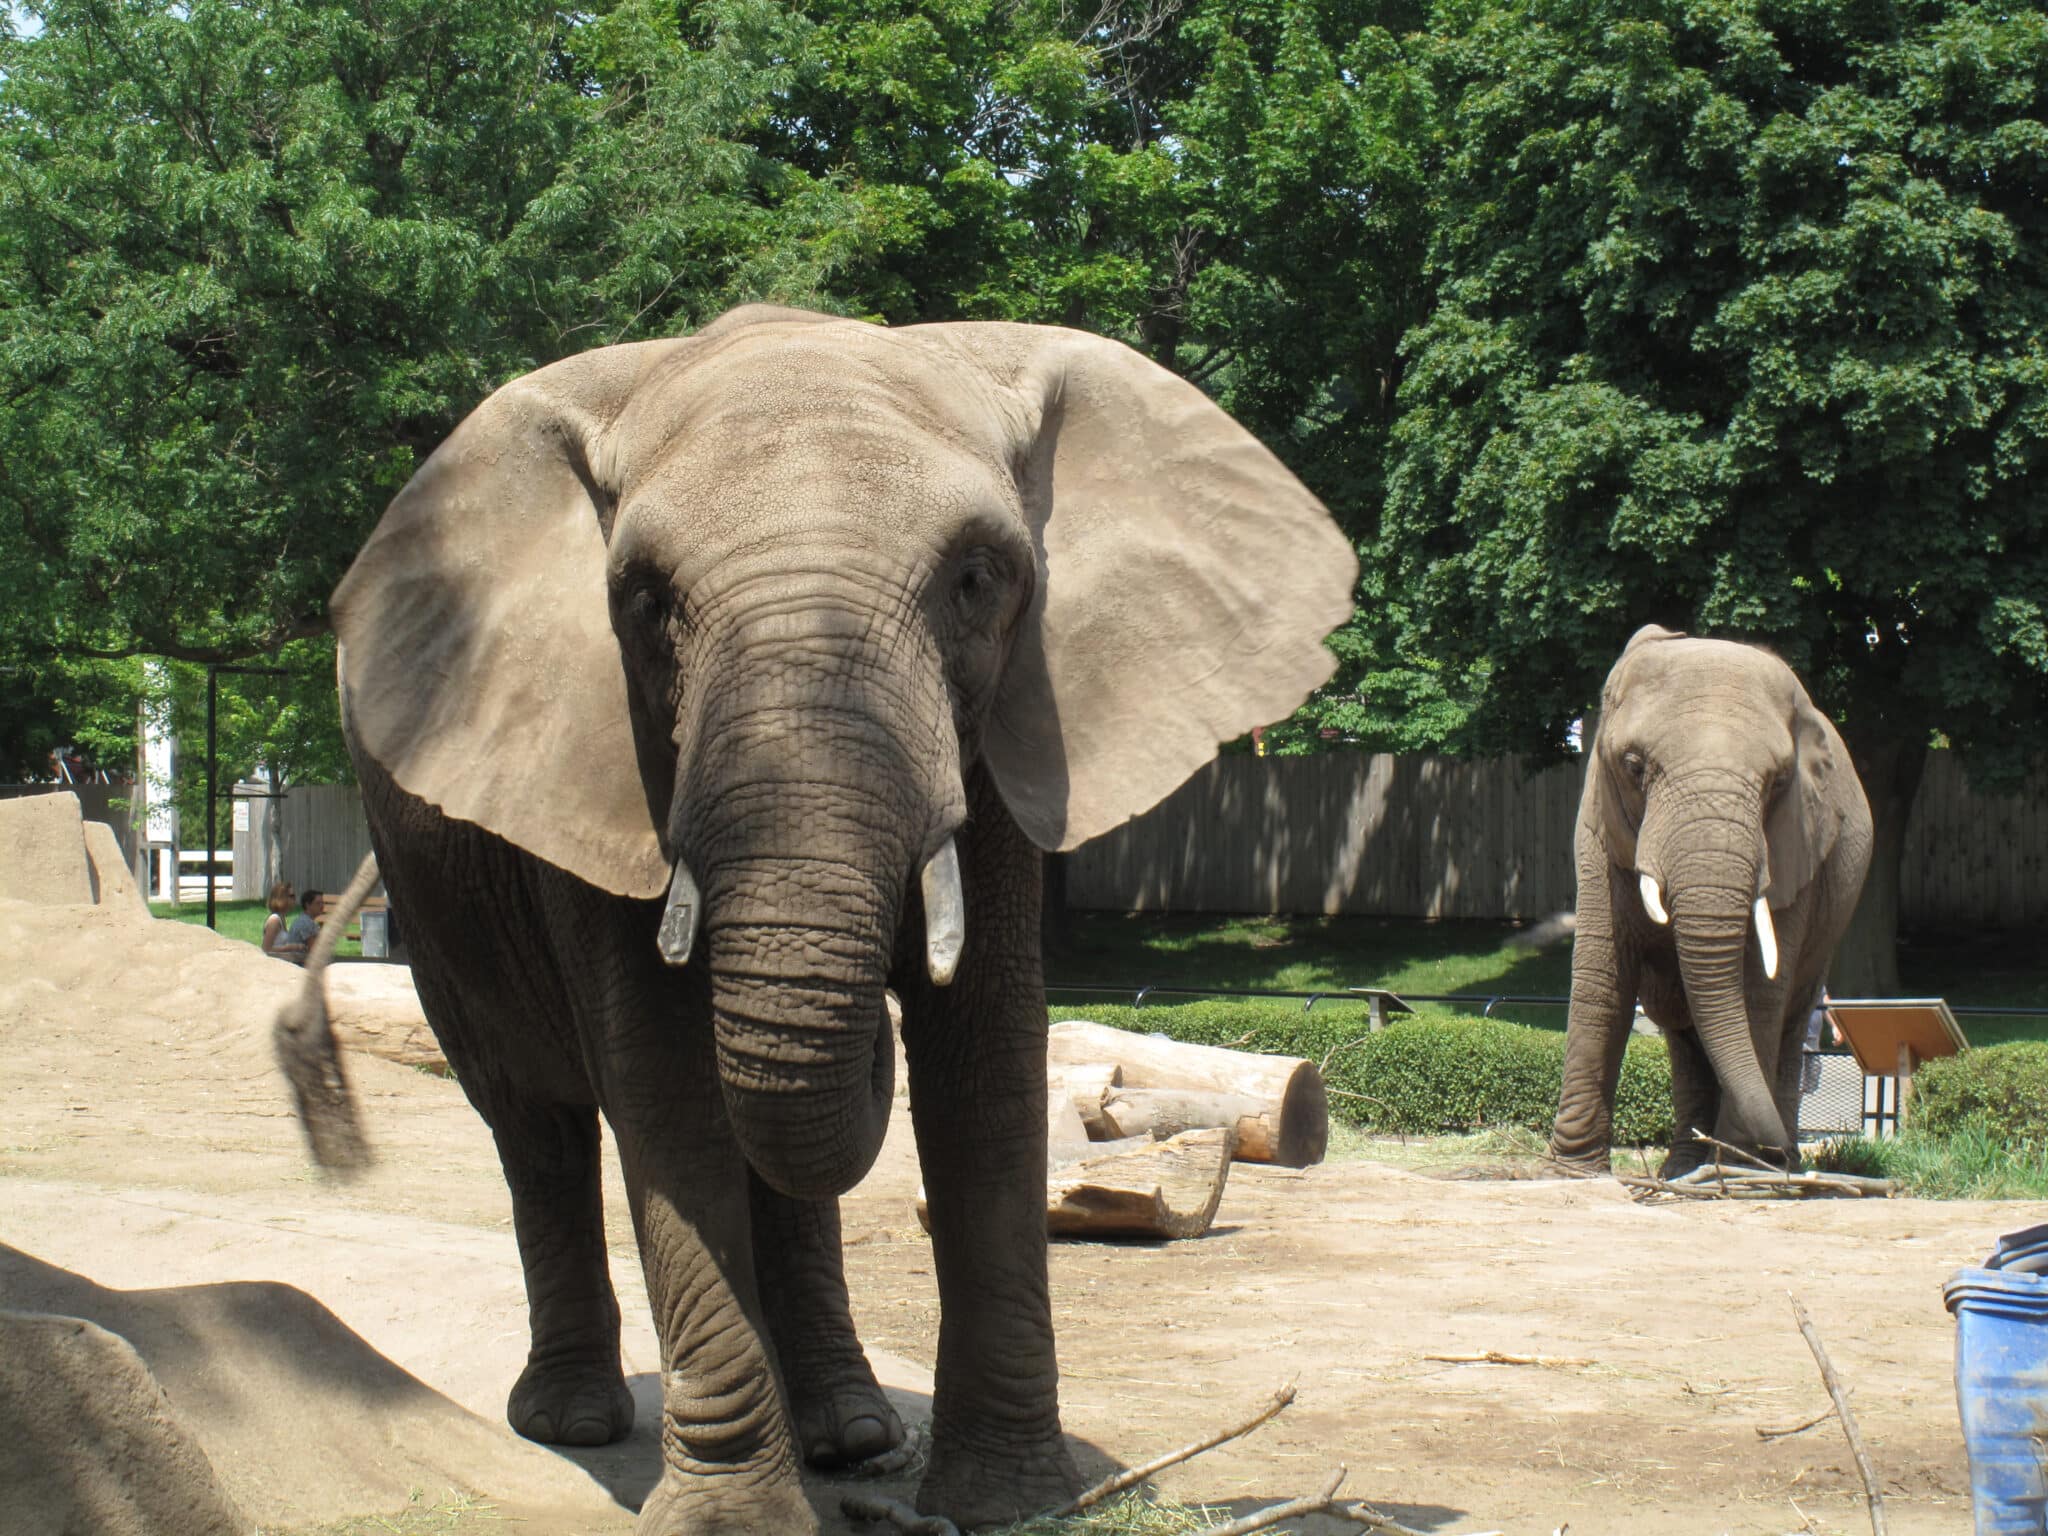 Two elephants at the milwaukee county zoo